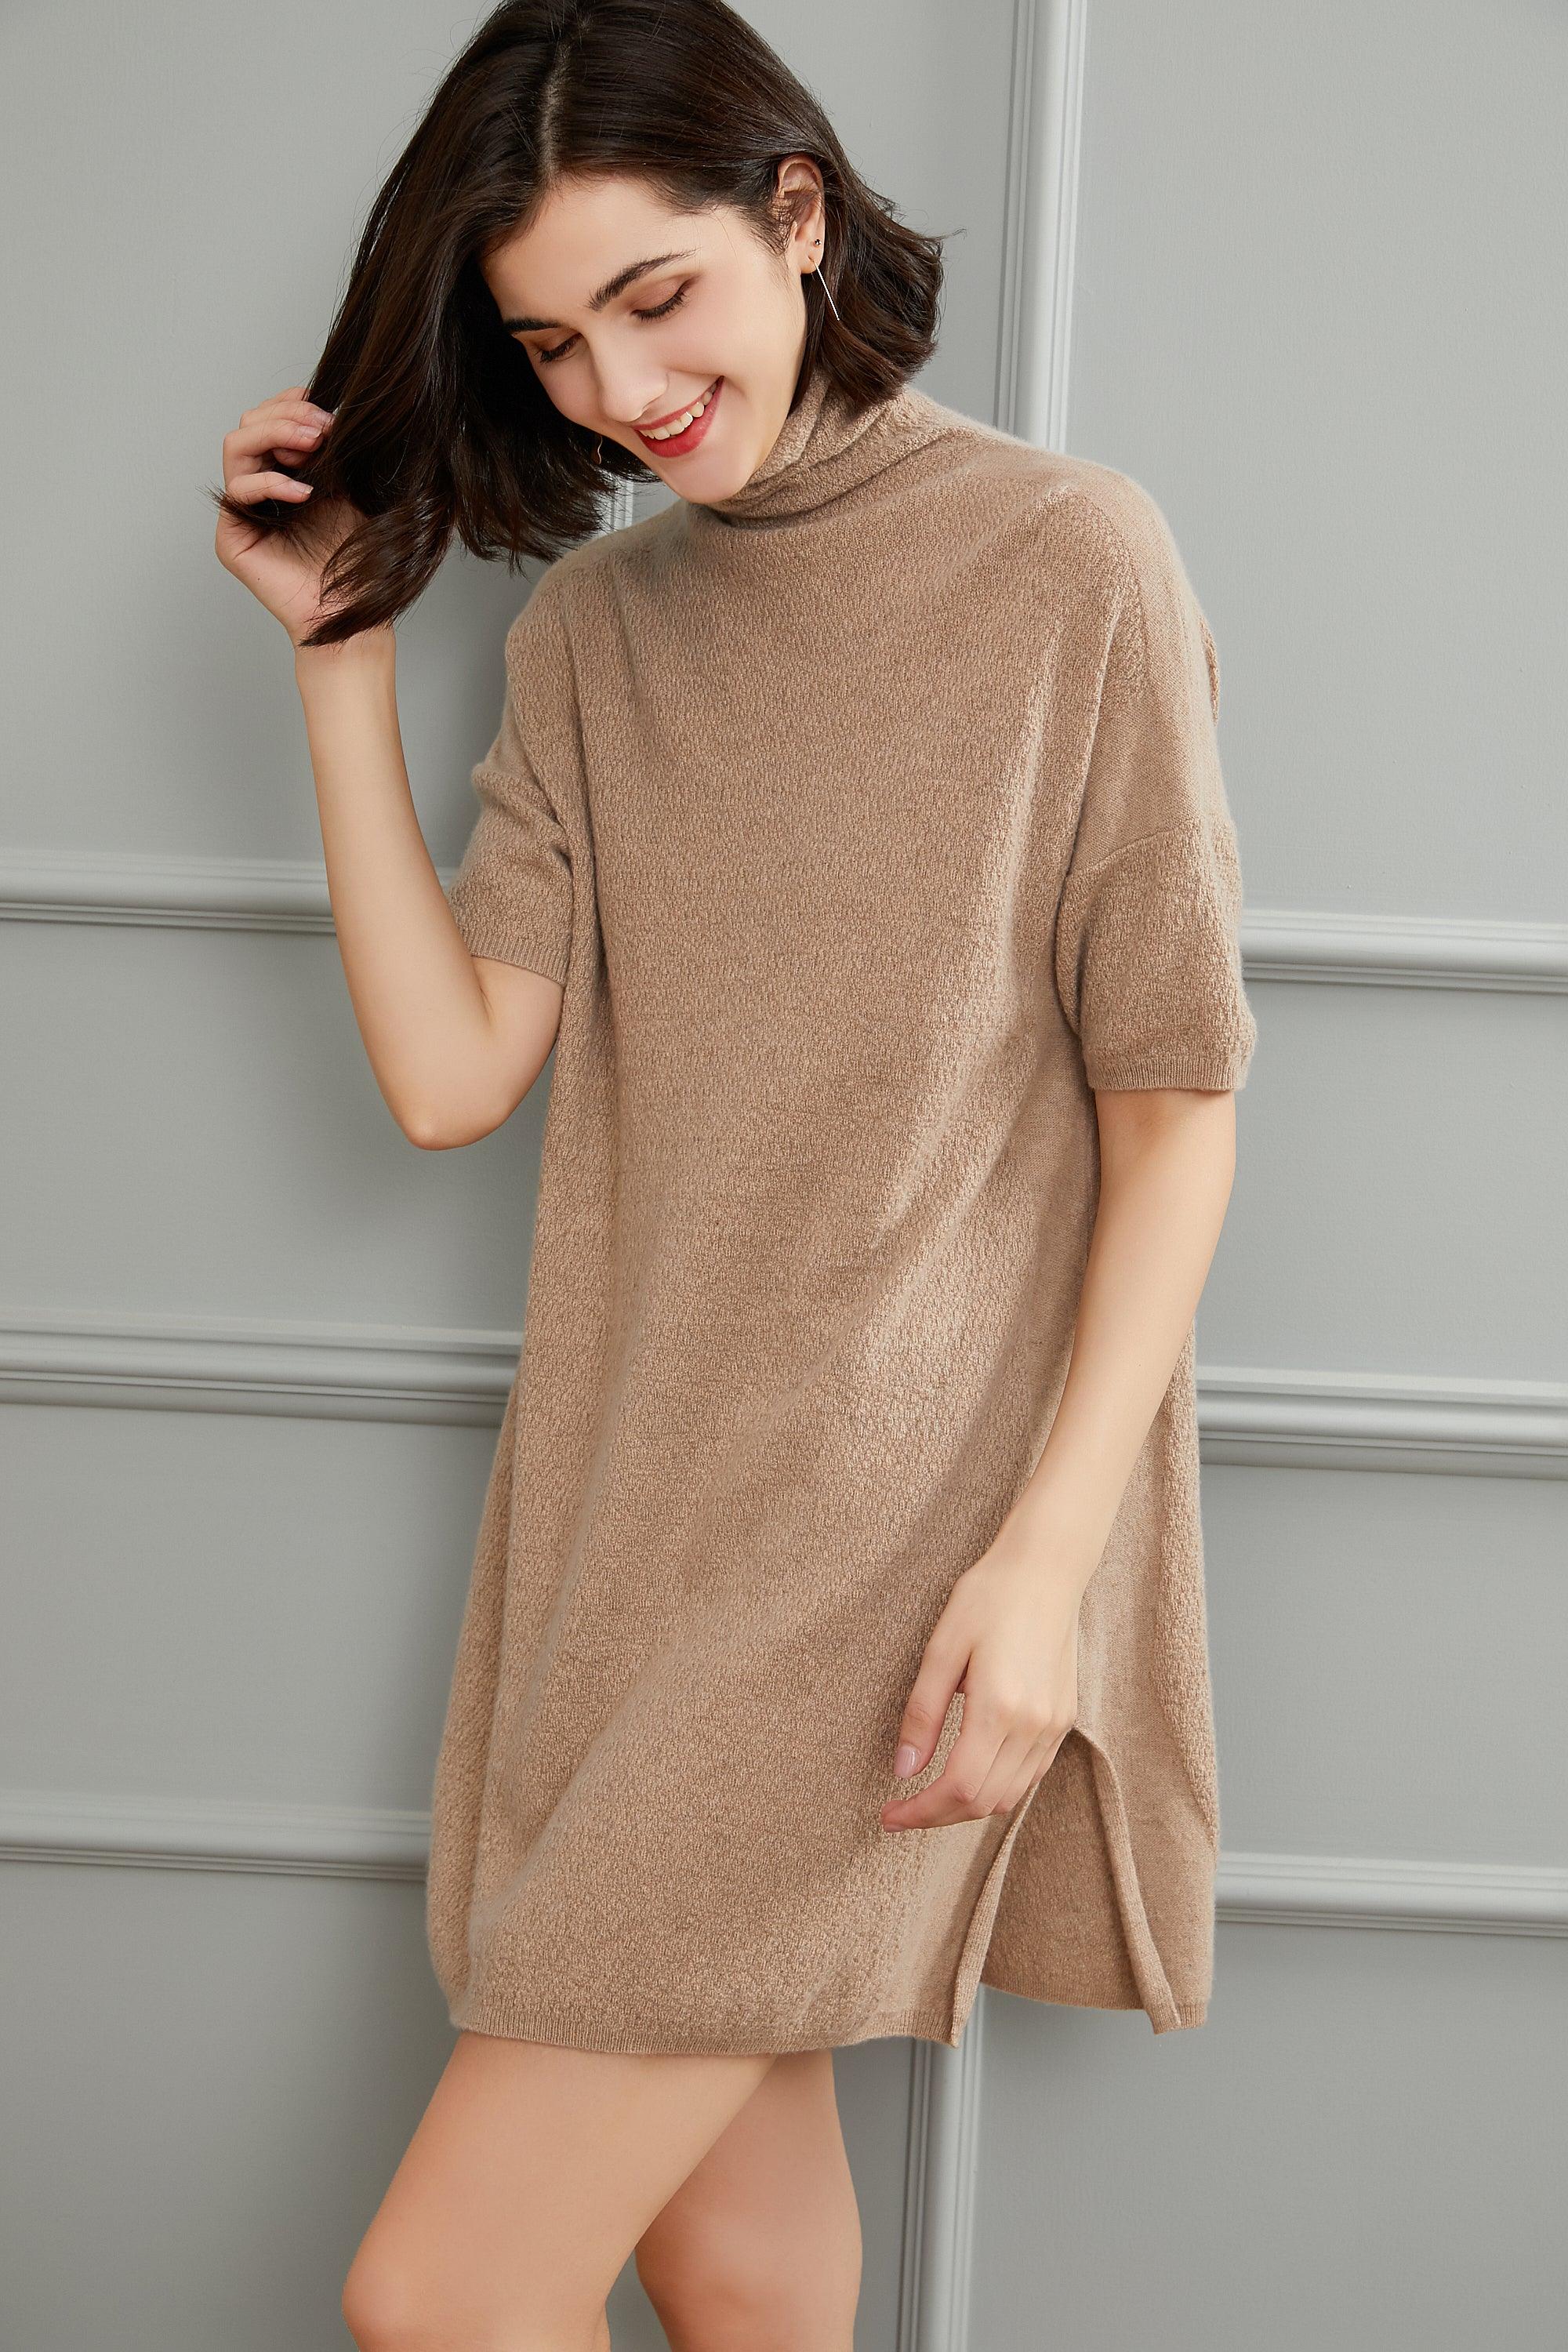 100% pure cashmere half sleeve women\'s Lamycashmere classice for – dress oversized turtleneck